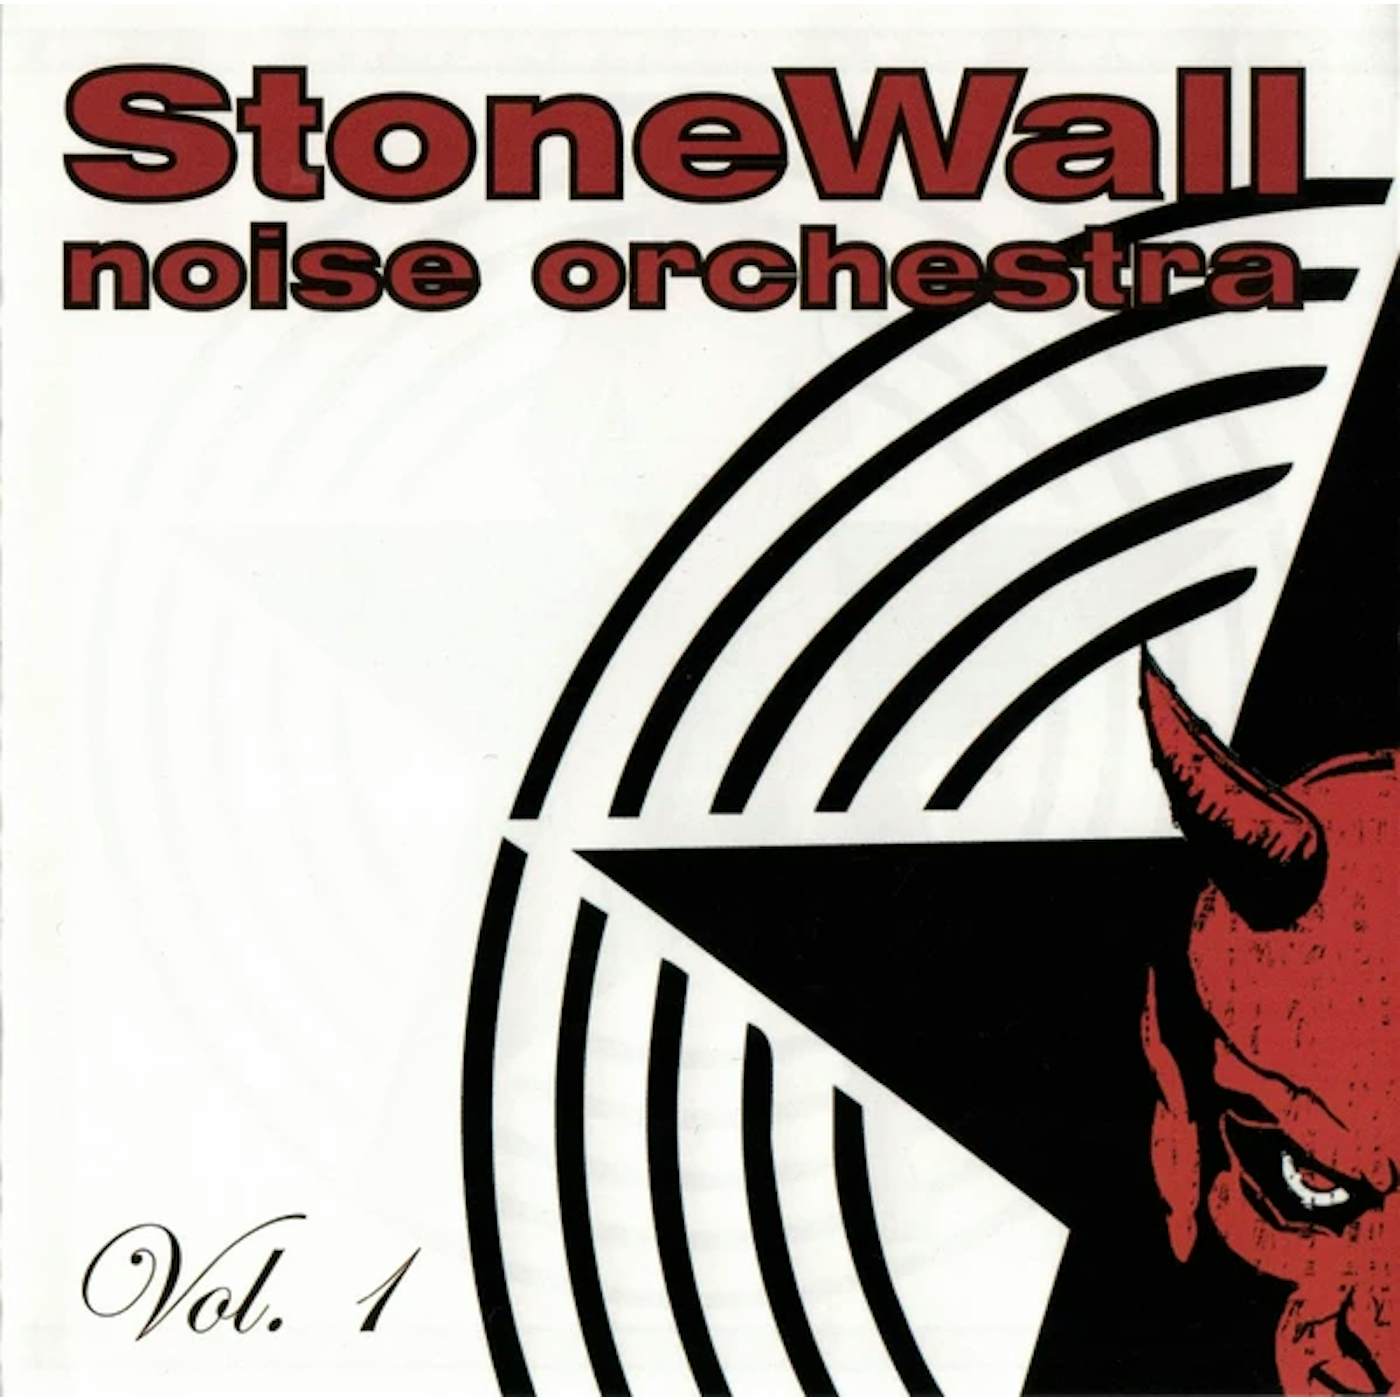 STONEWALL NOISE ORCHESTRA Vol. 1 Vinyl Record